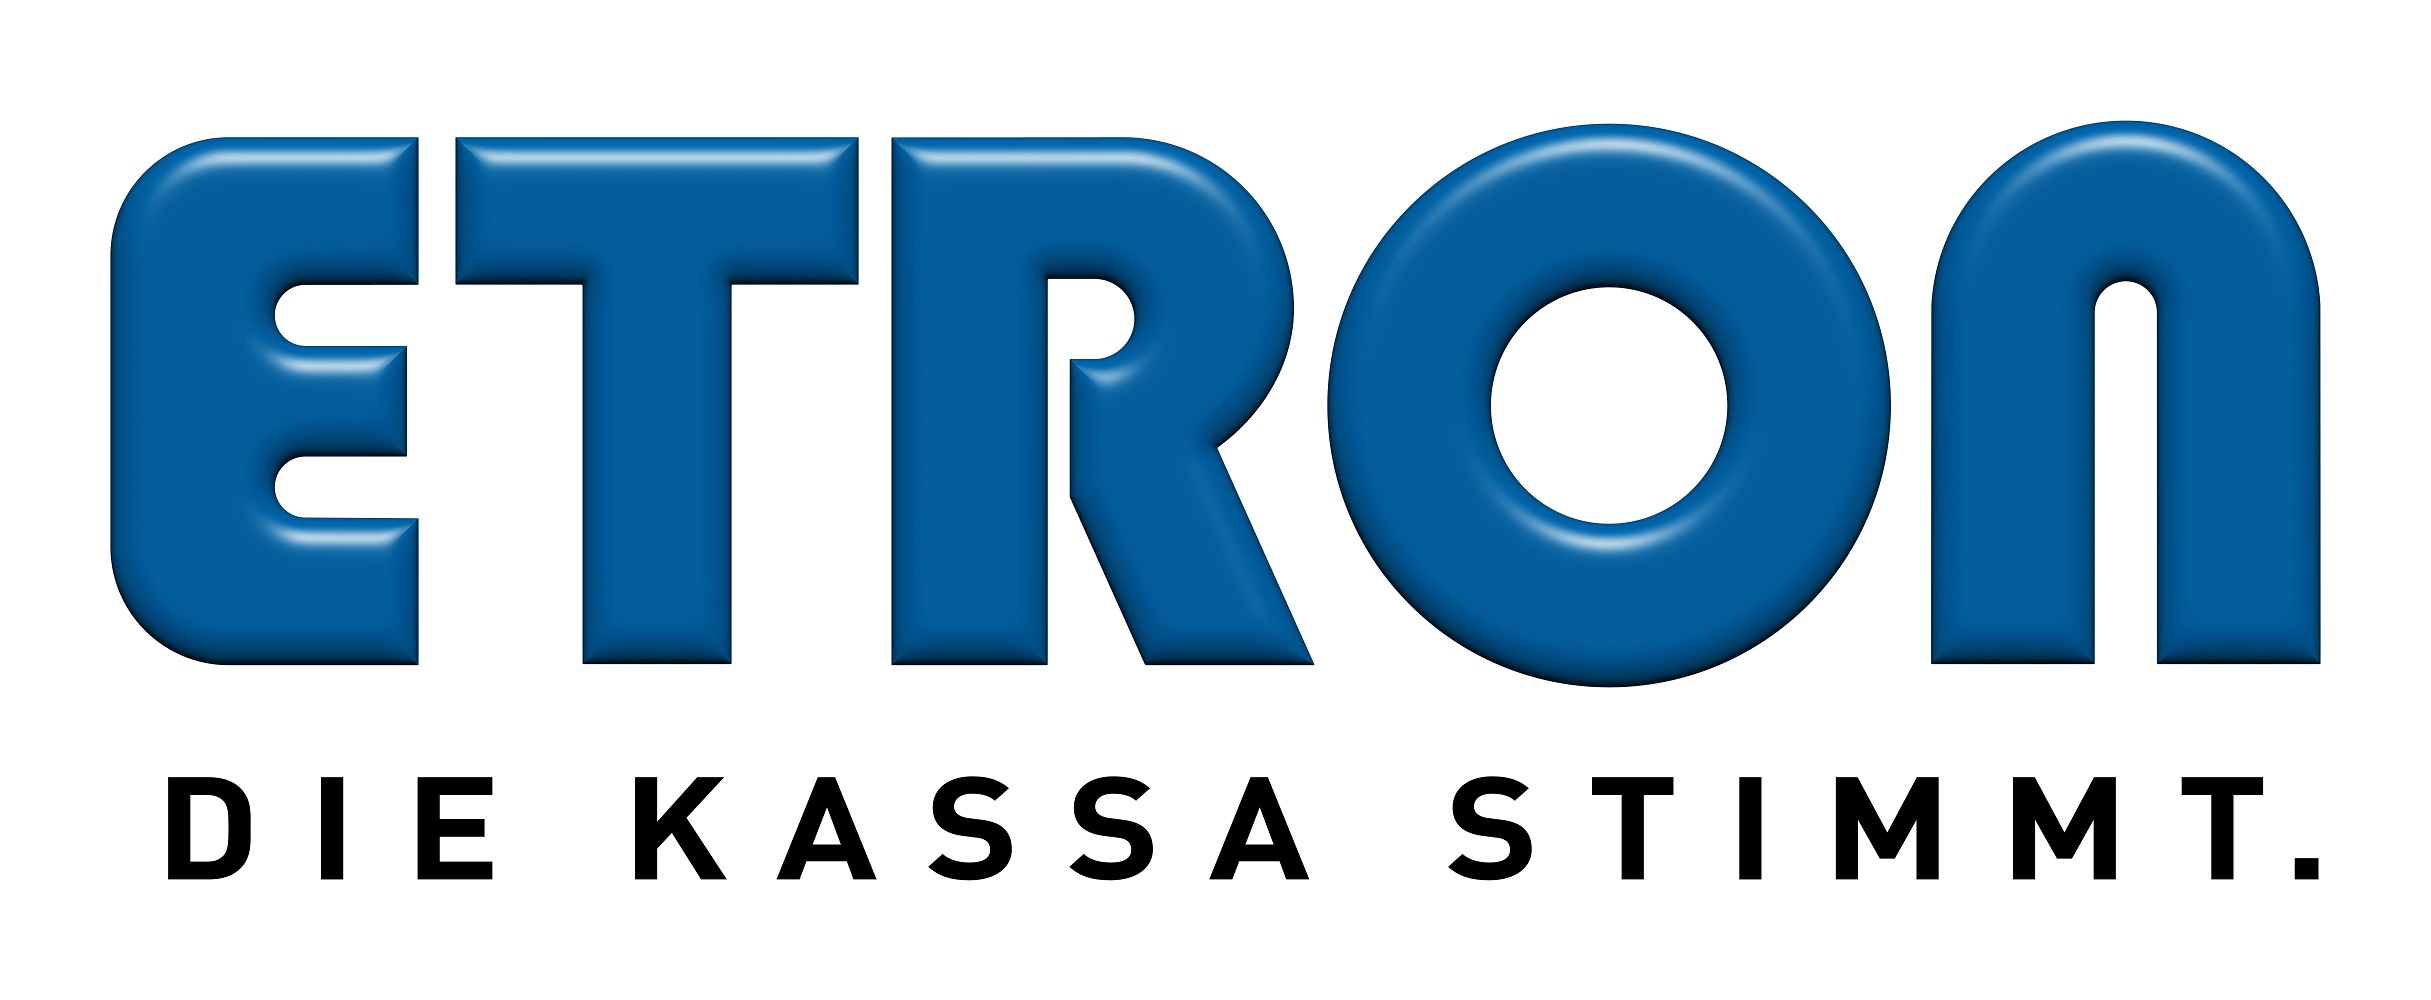 Moderne Registrierkasse - Etron Logo